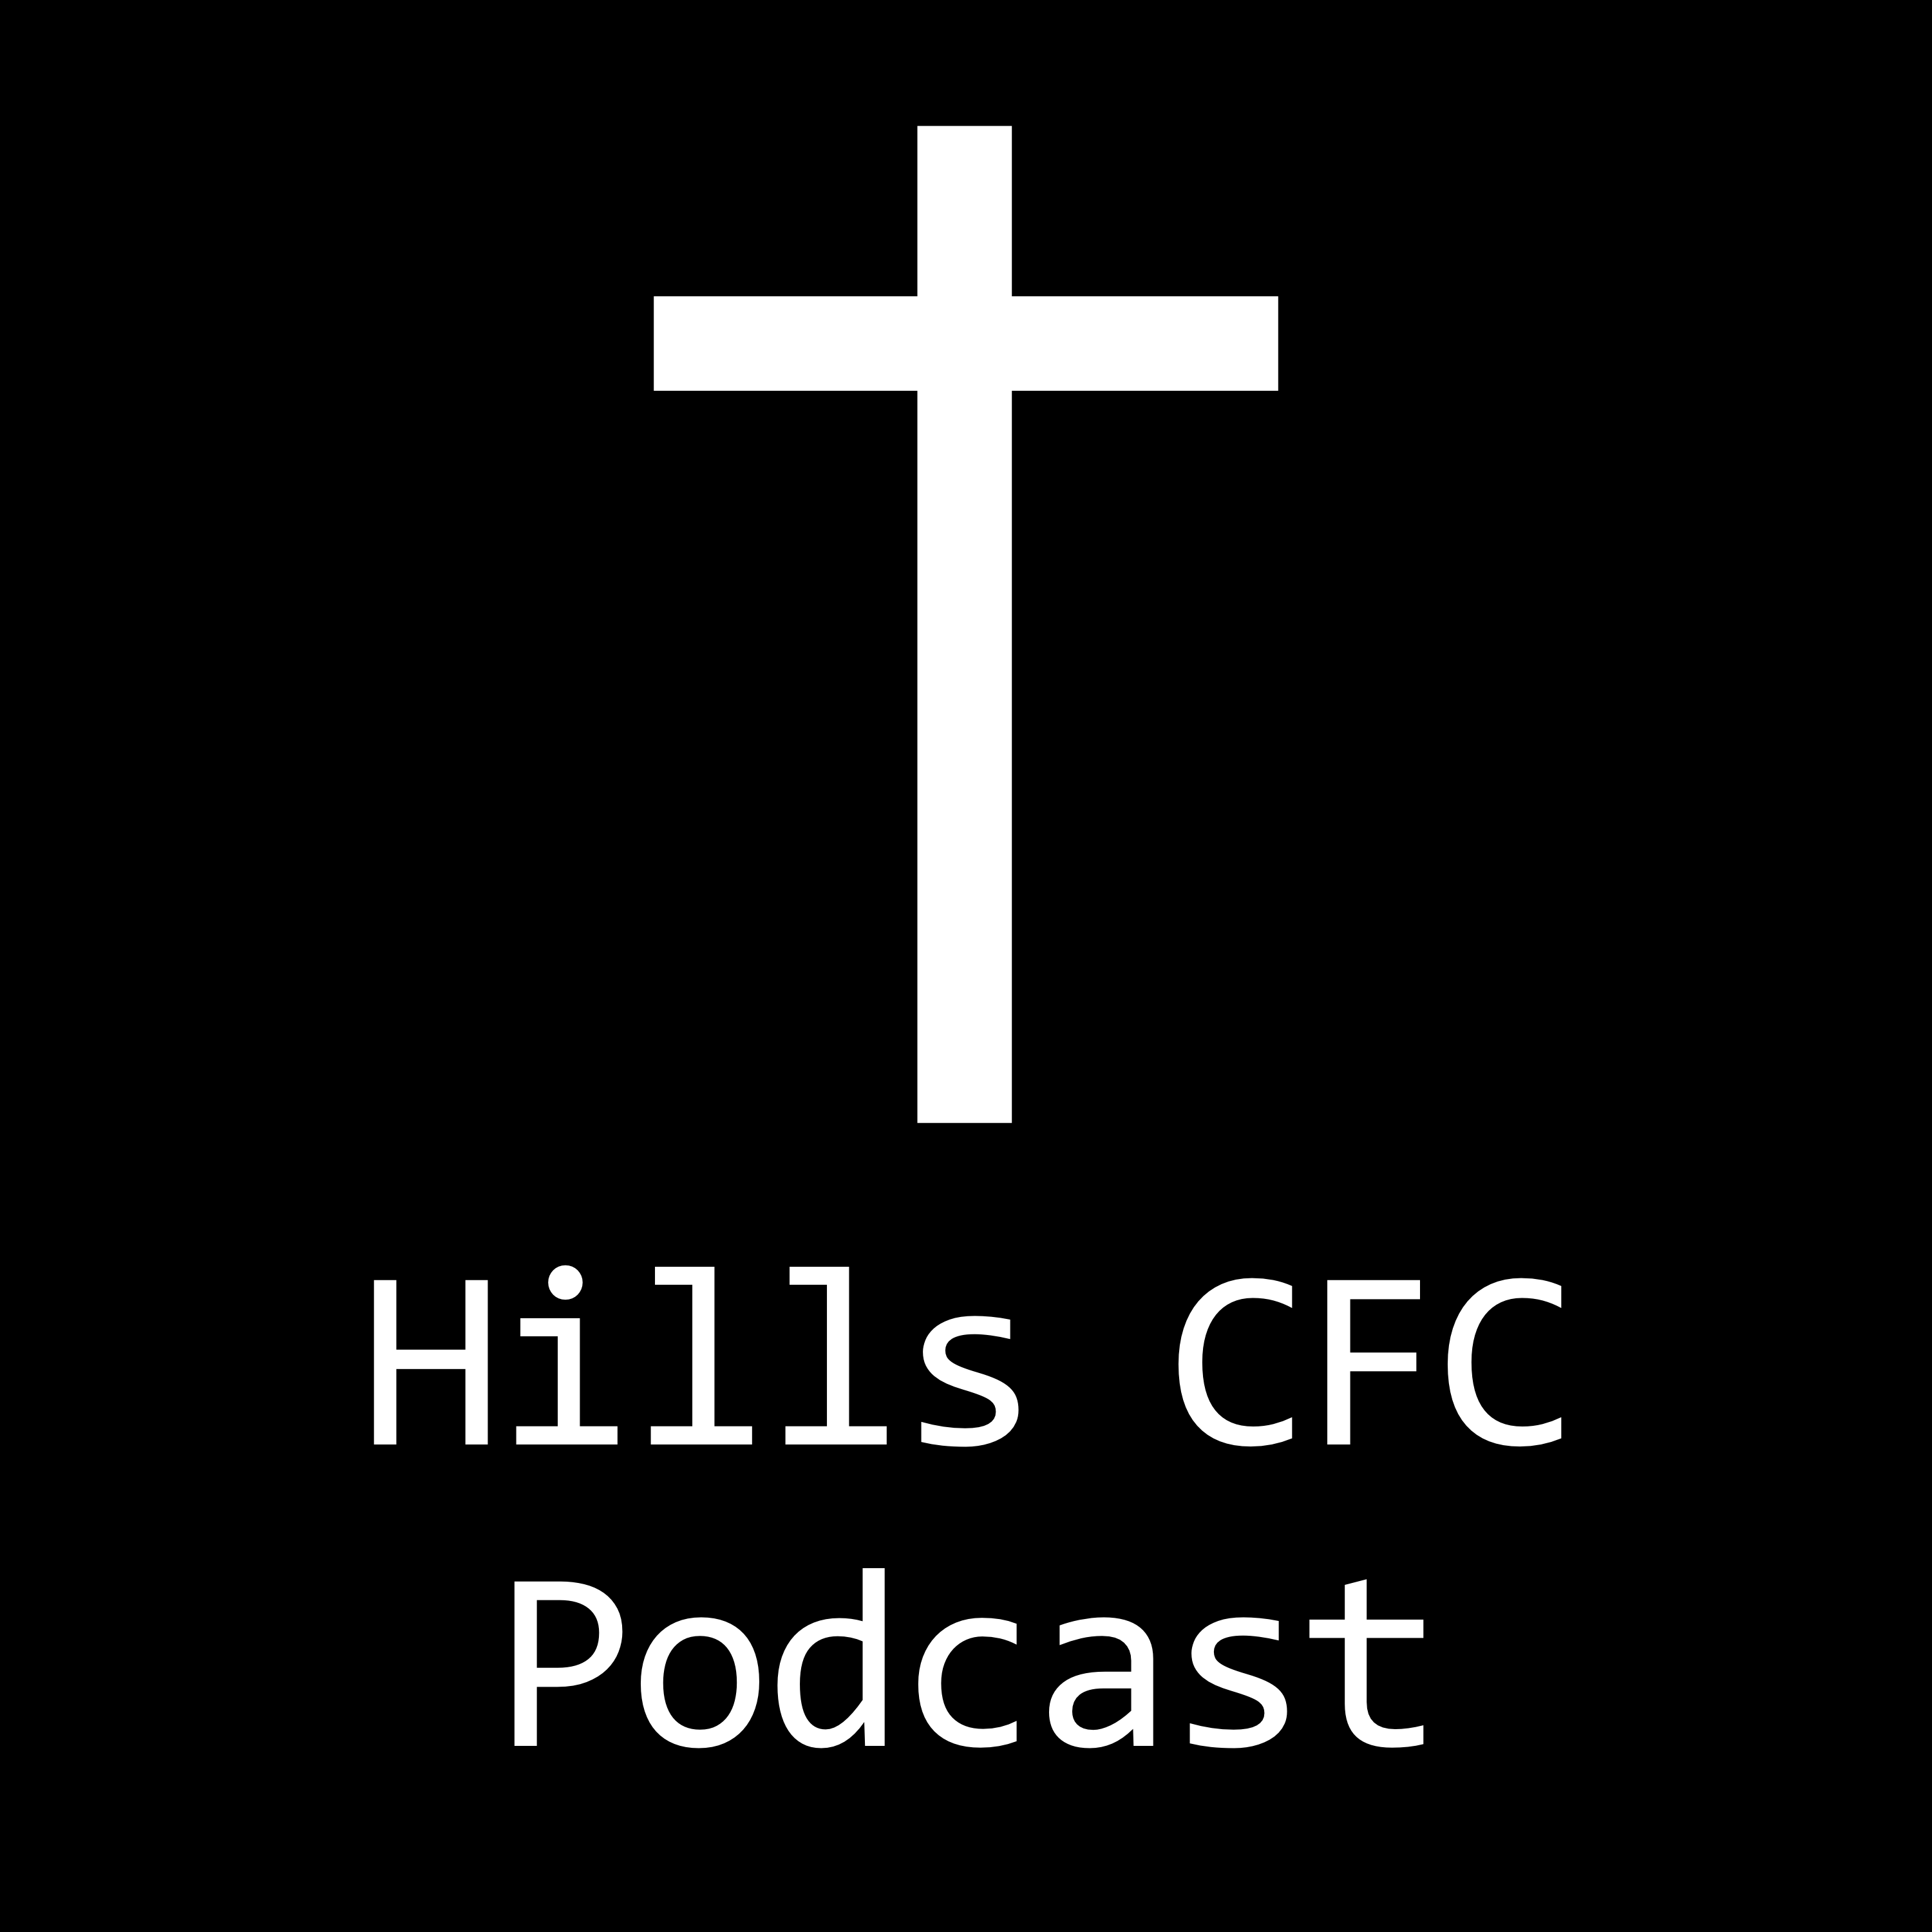 Hills CFC Podcast